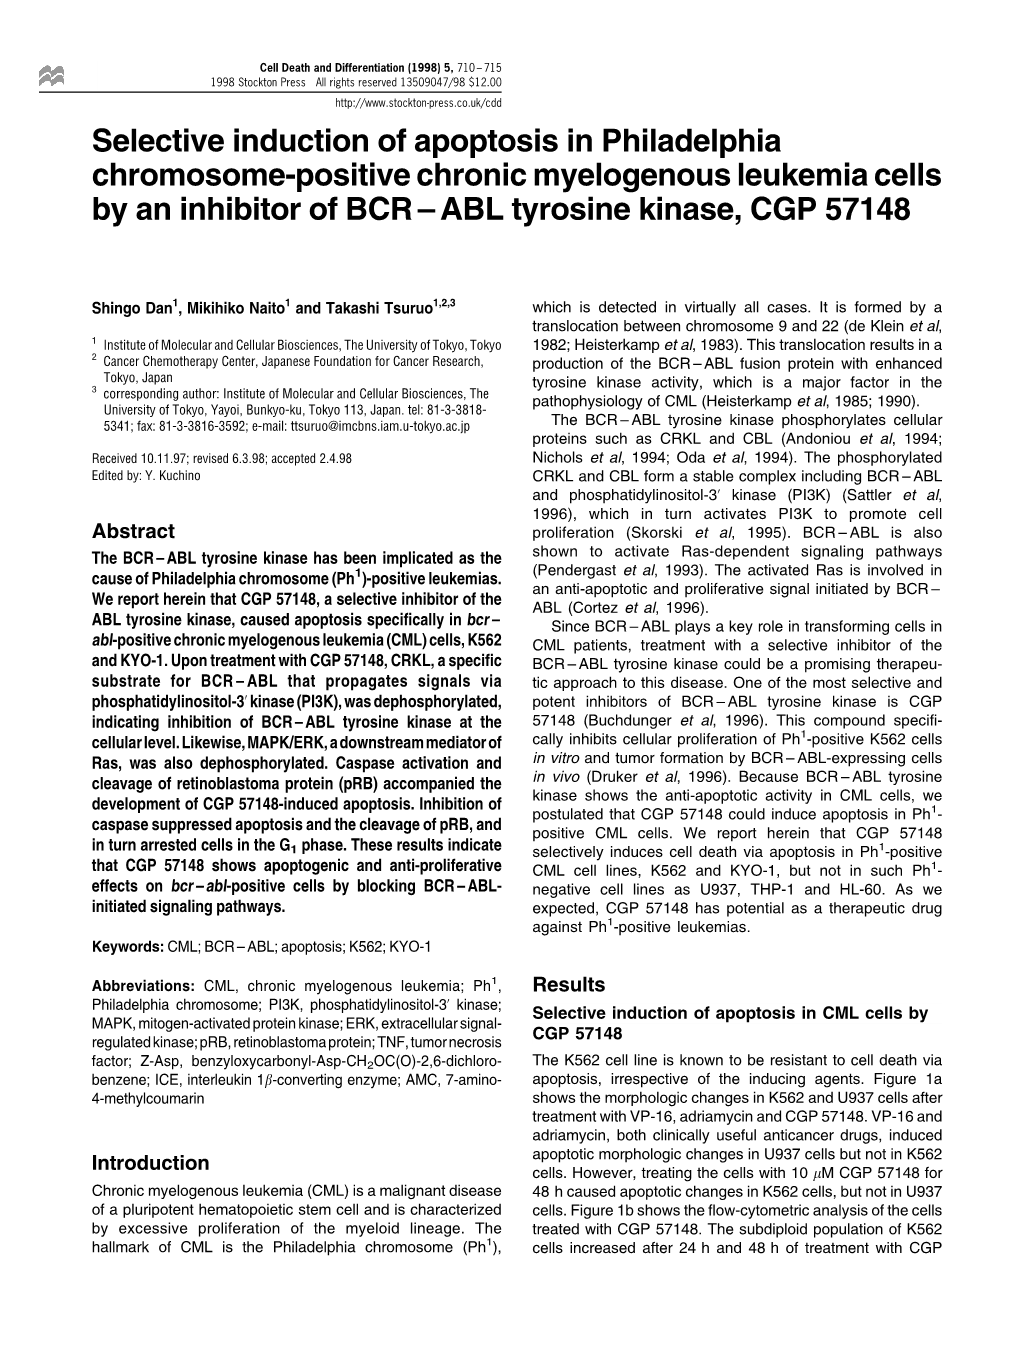 Selective Induction of Apoptosis in Philadelphia Chromosome-Positive Chronic Myelogenous Leukemia Cells by an Inhibitor of BCR ± ABL Tyrosine Kinase, CGP 57148